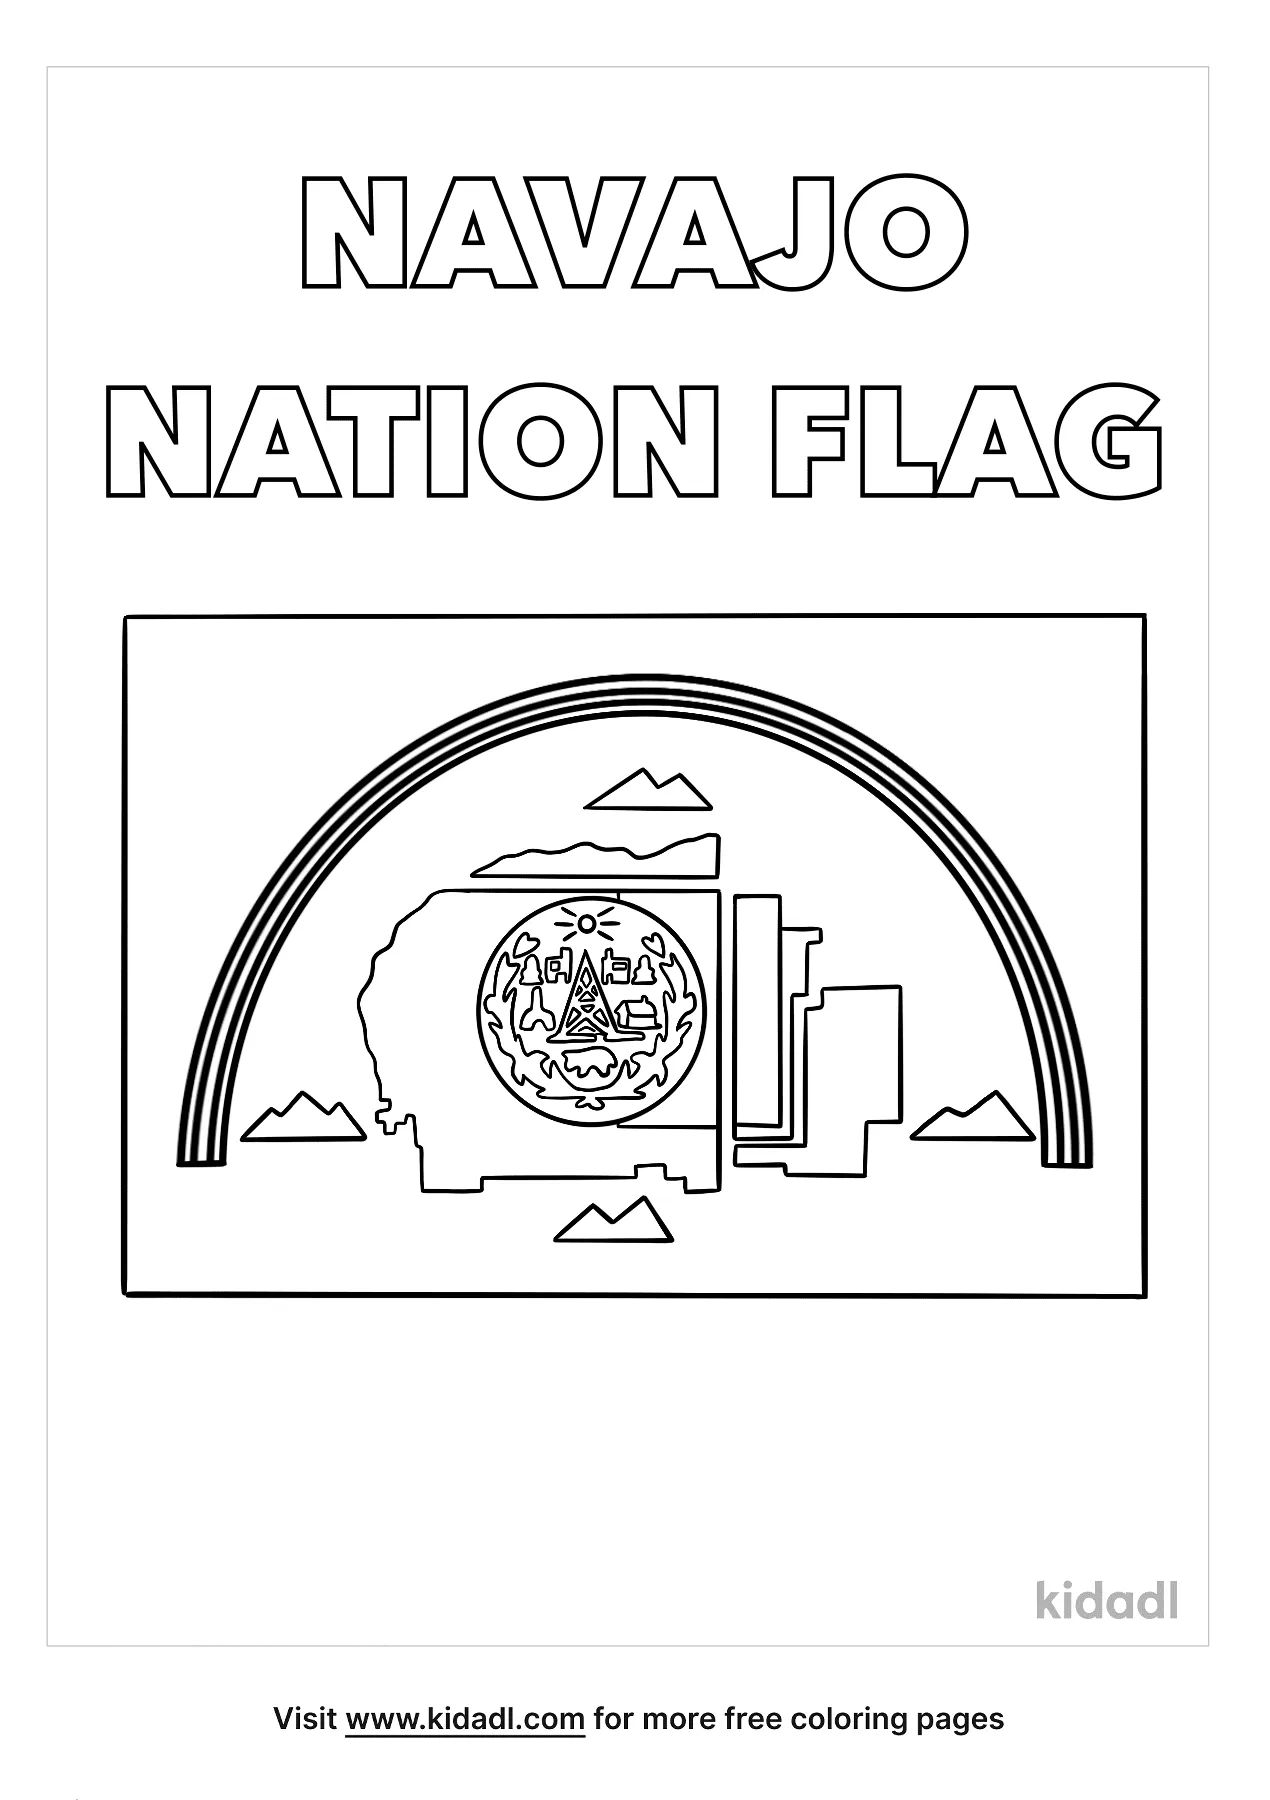 Free navajo nation flag coloring page coloring page printables